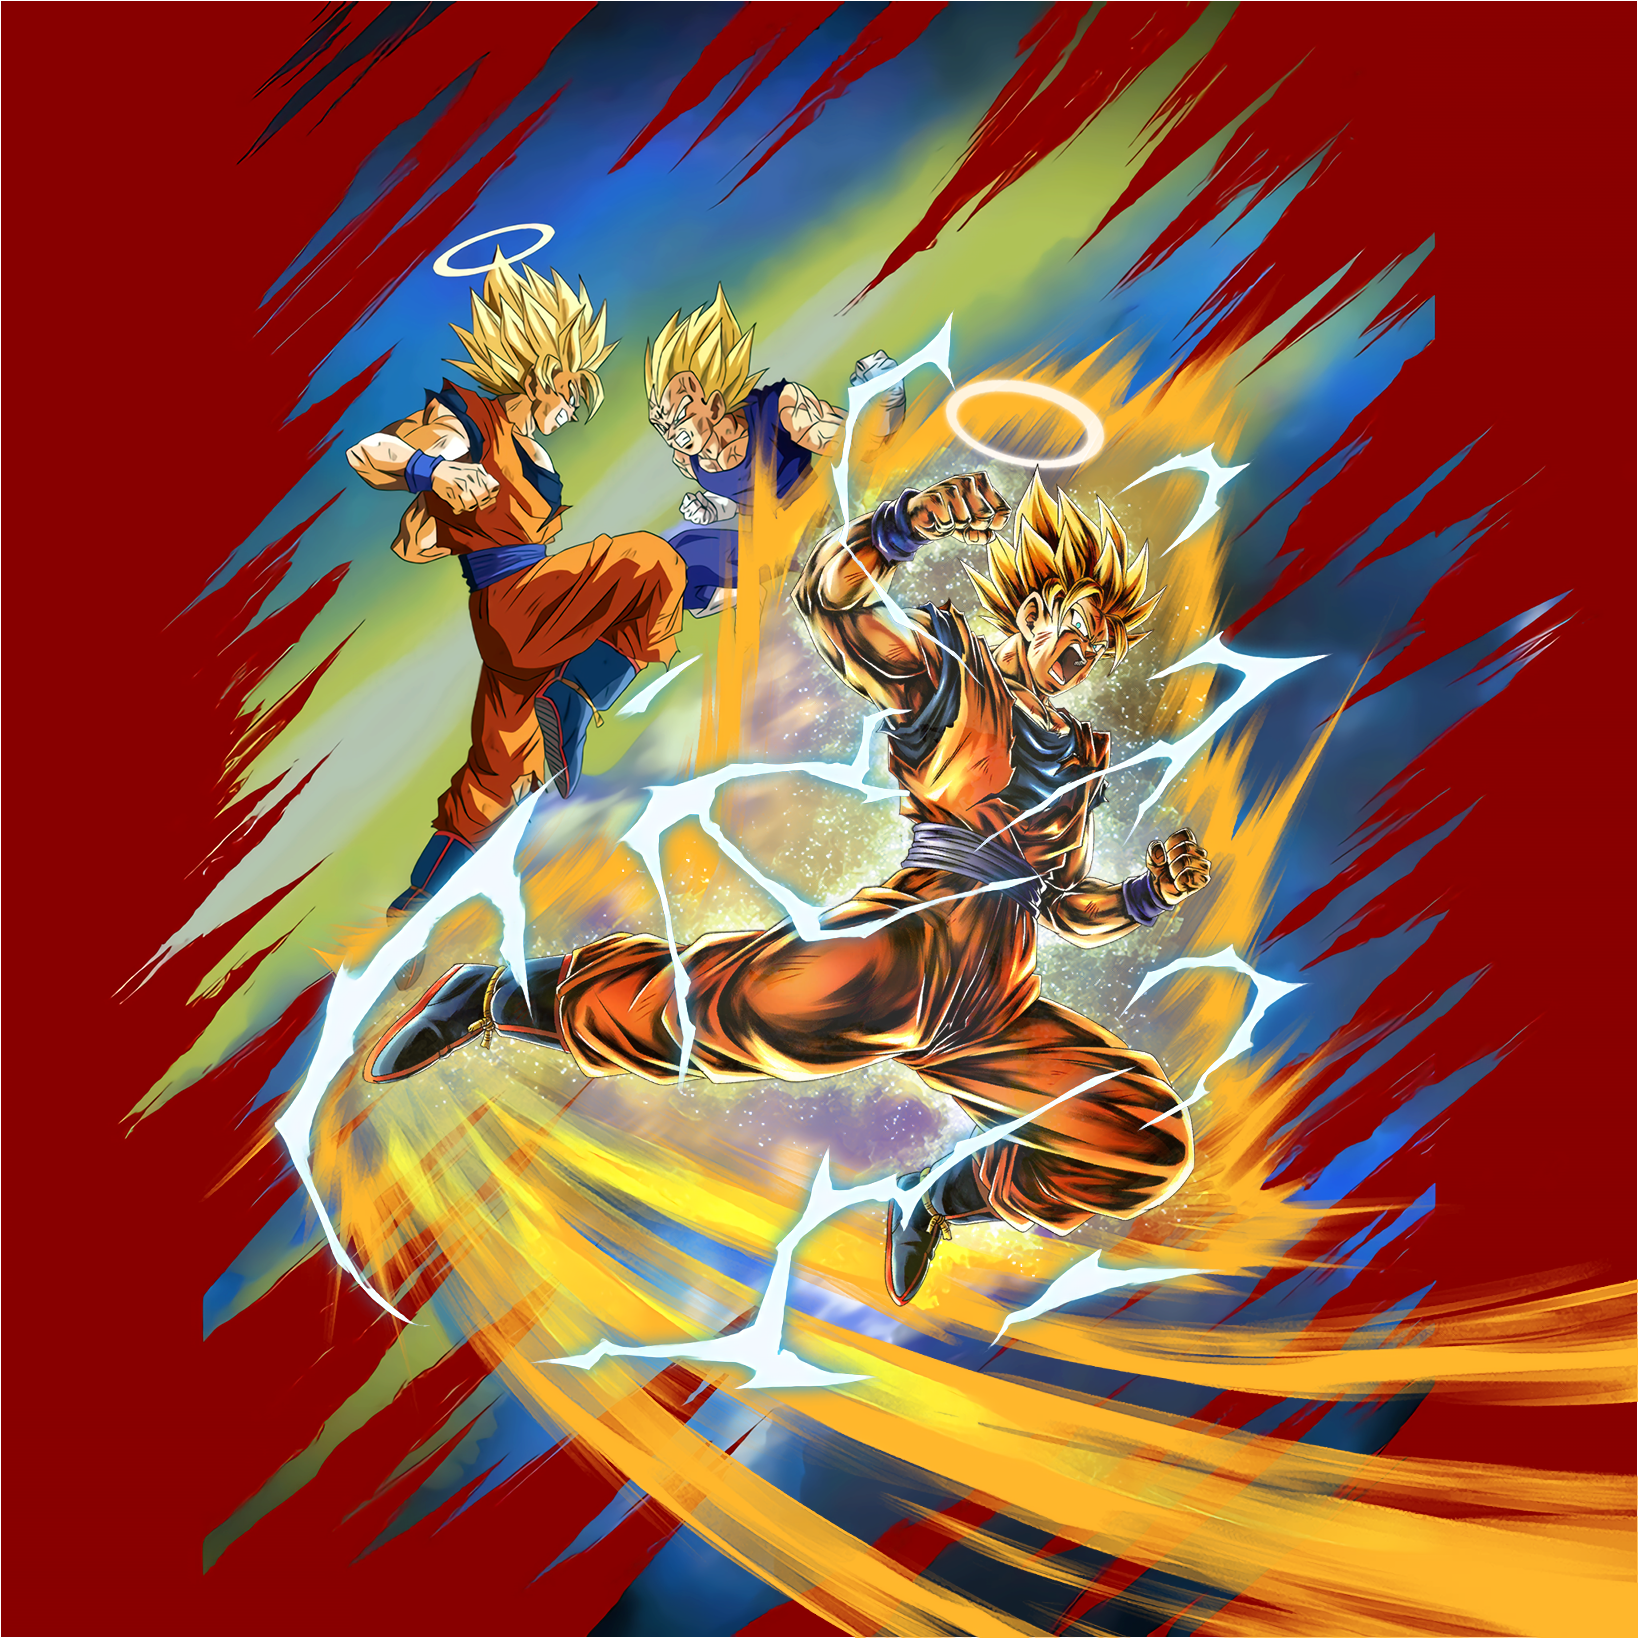 Goku (Vs Majin Vegeta) Wallpaper [DB Legends] by Maxiuchiha22 on DeviantArt